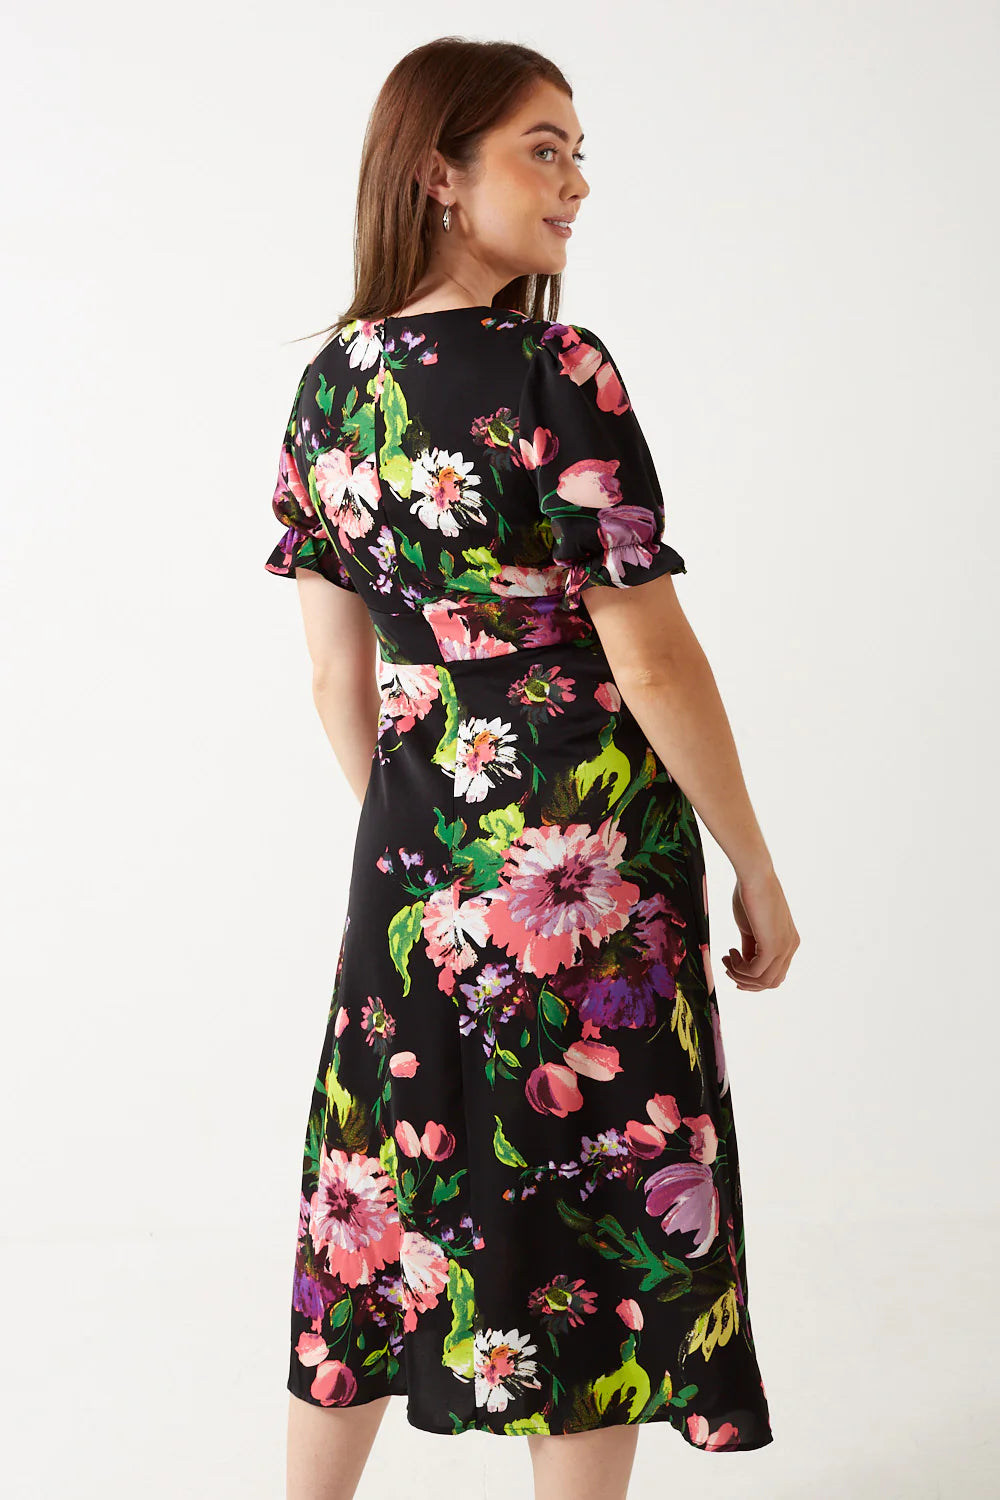 Aubrey Black Floral Dress